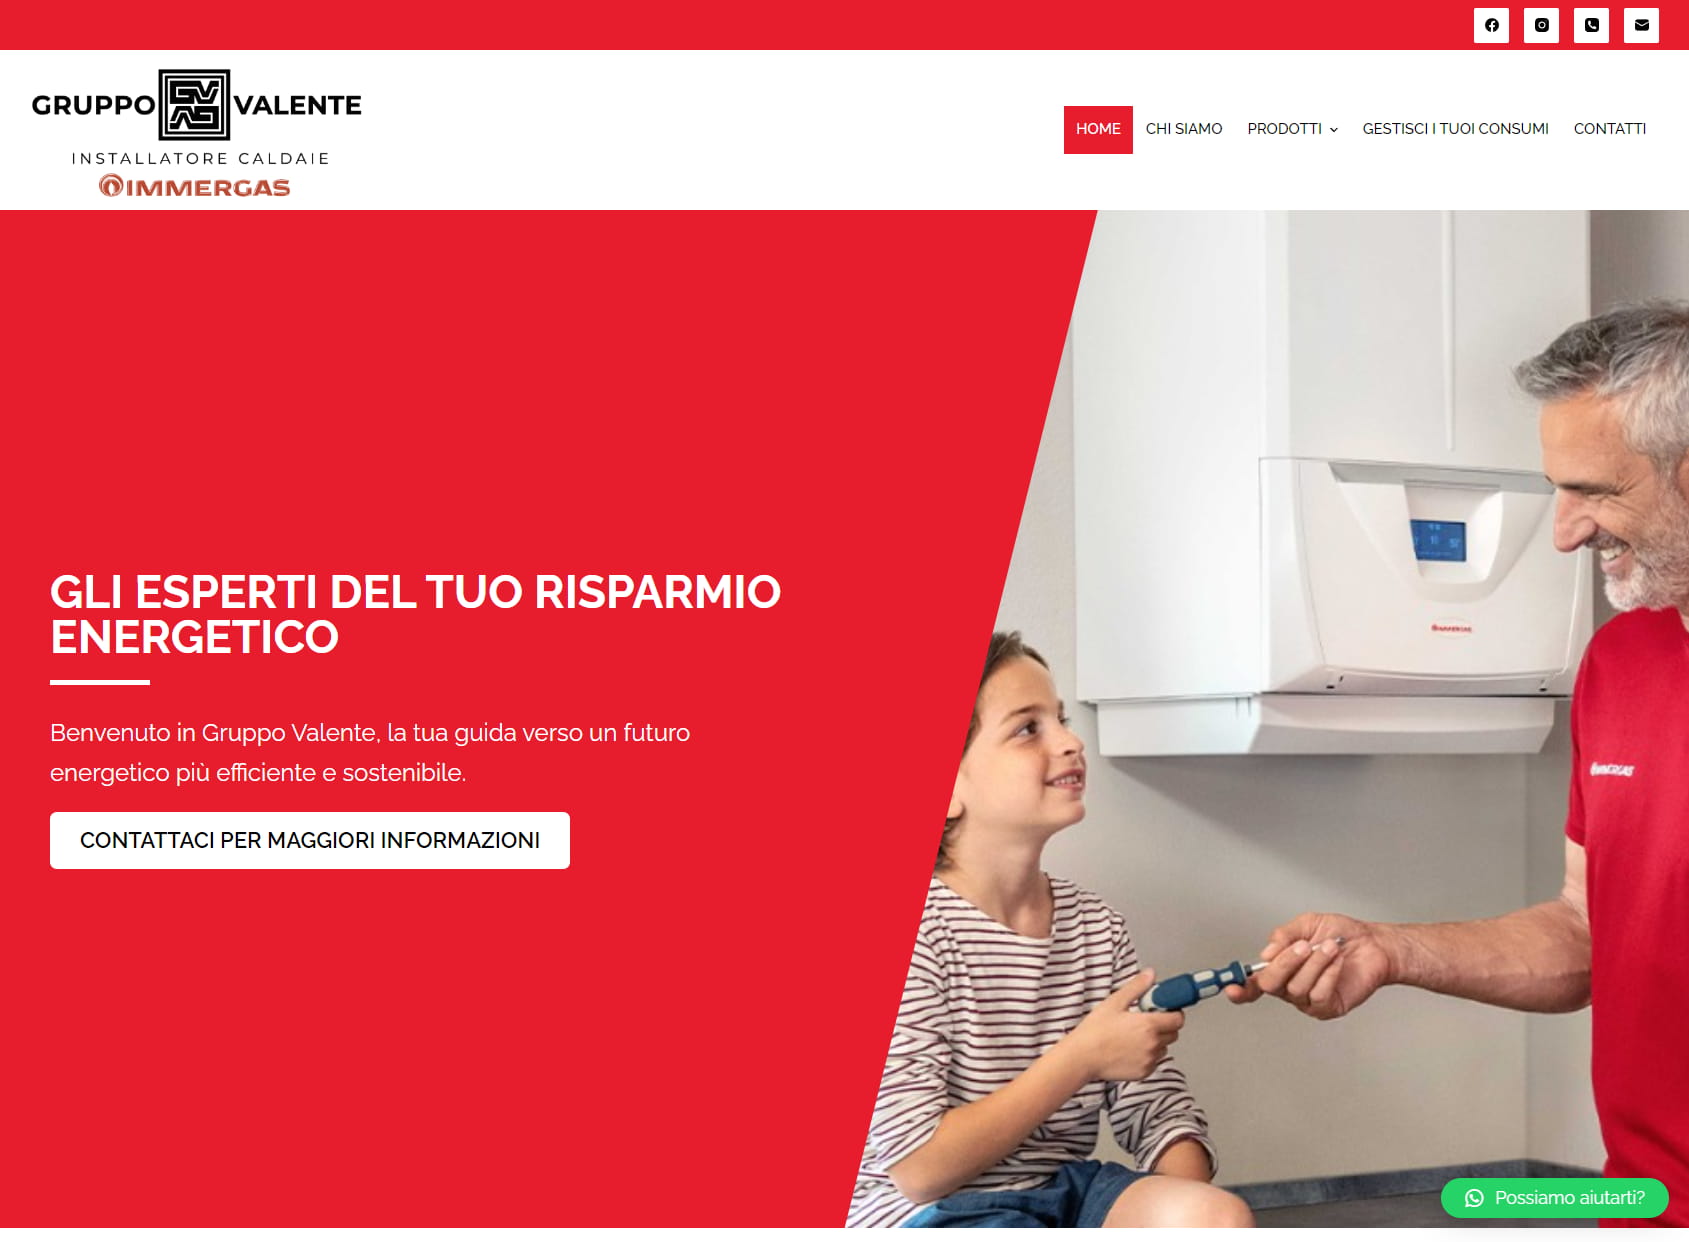 GRUPPO VALENTE Reggio Emilia - Punto EDISON Business Partner